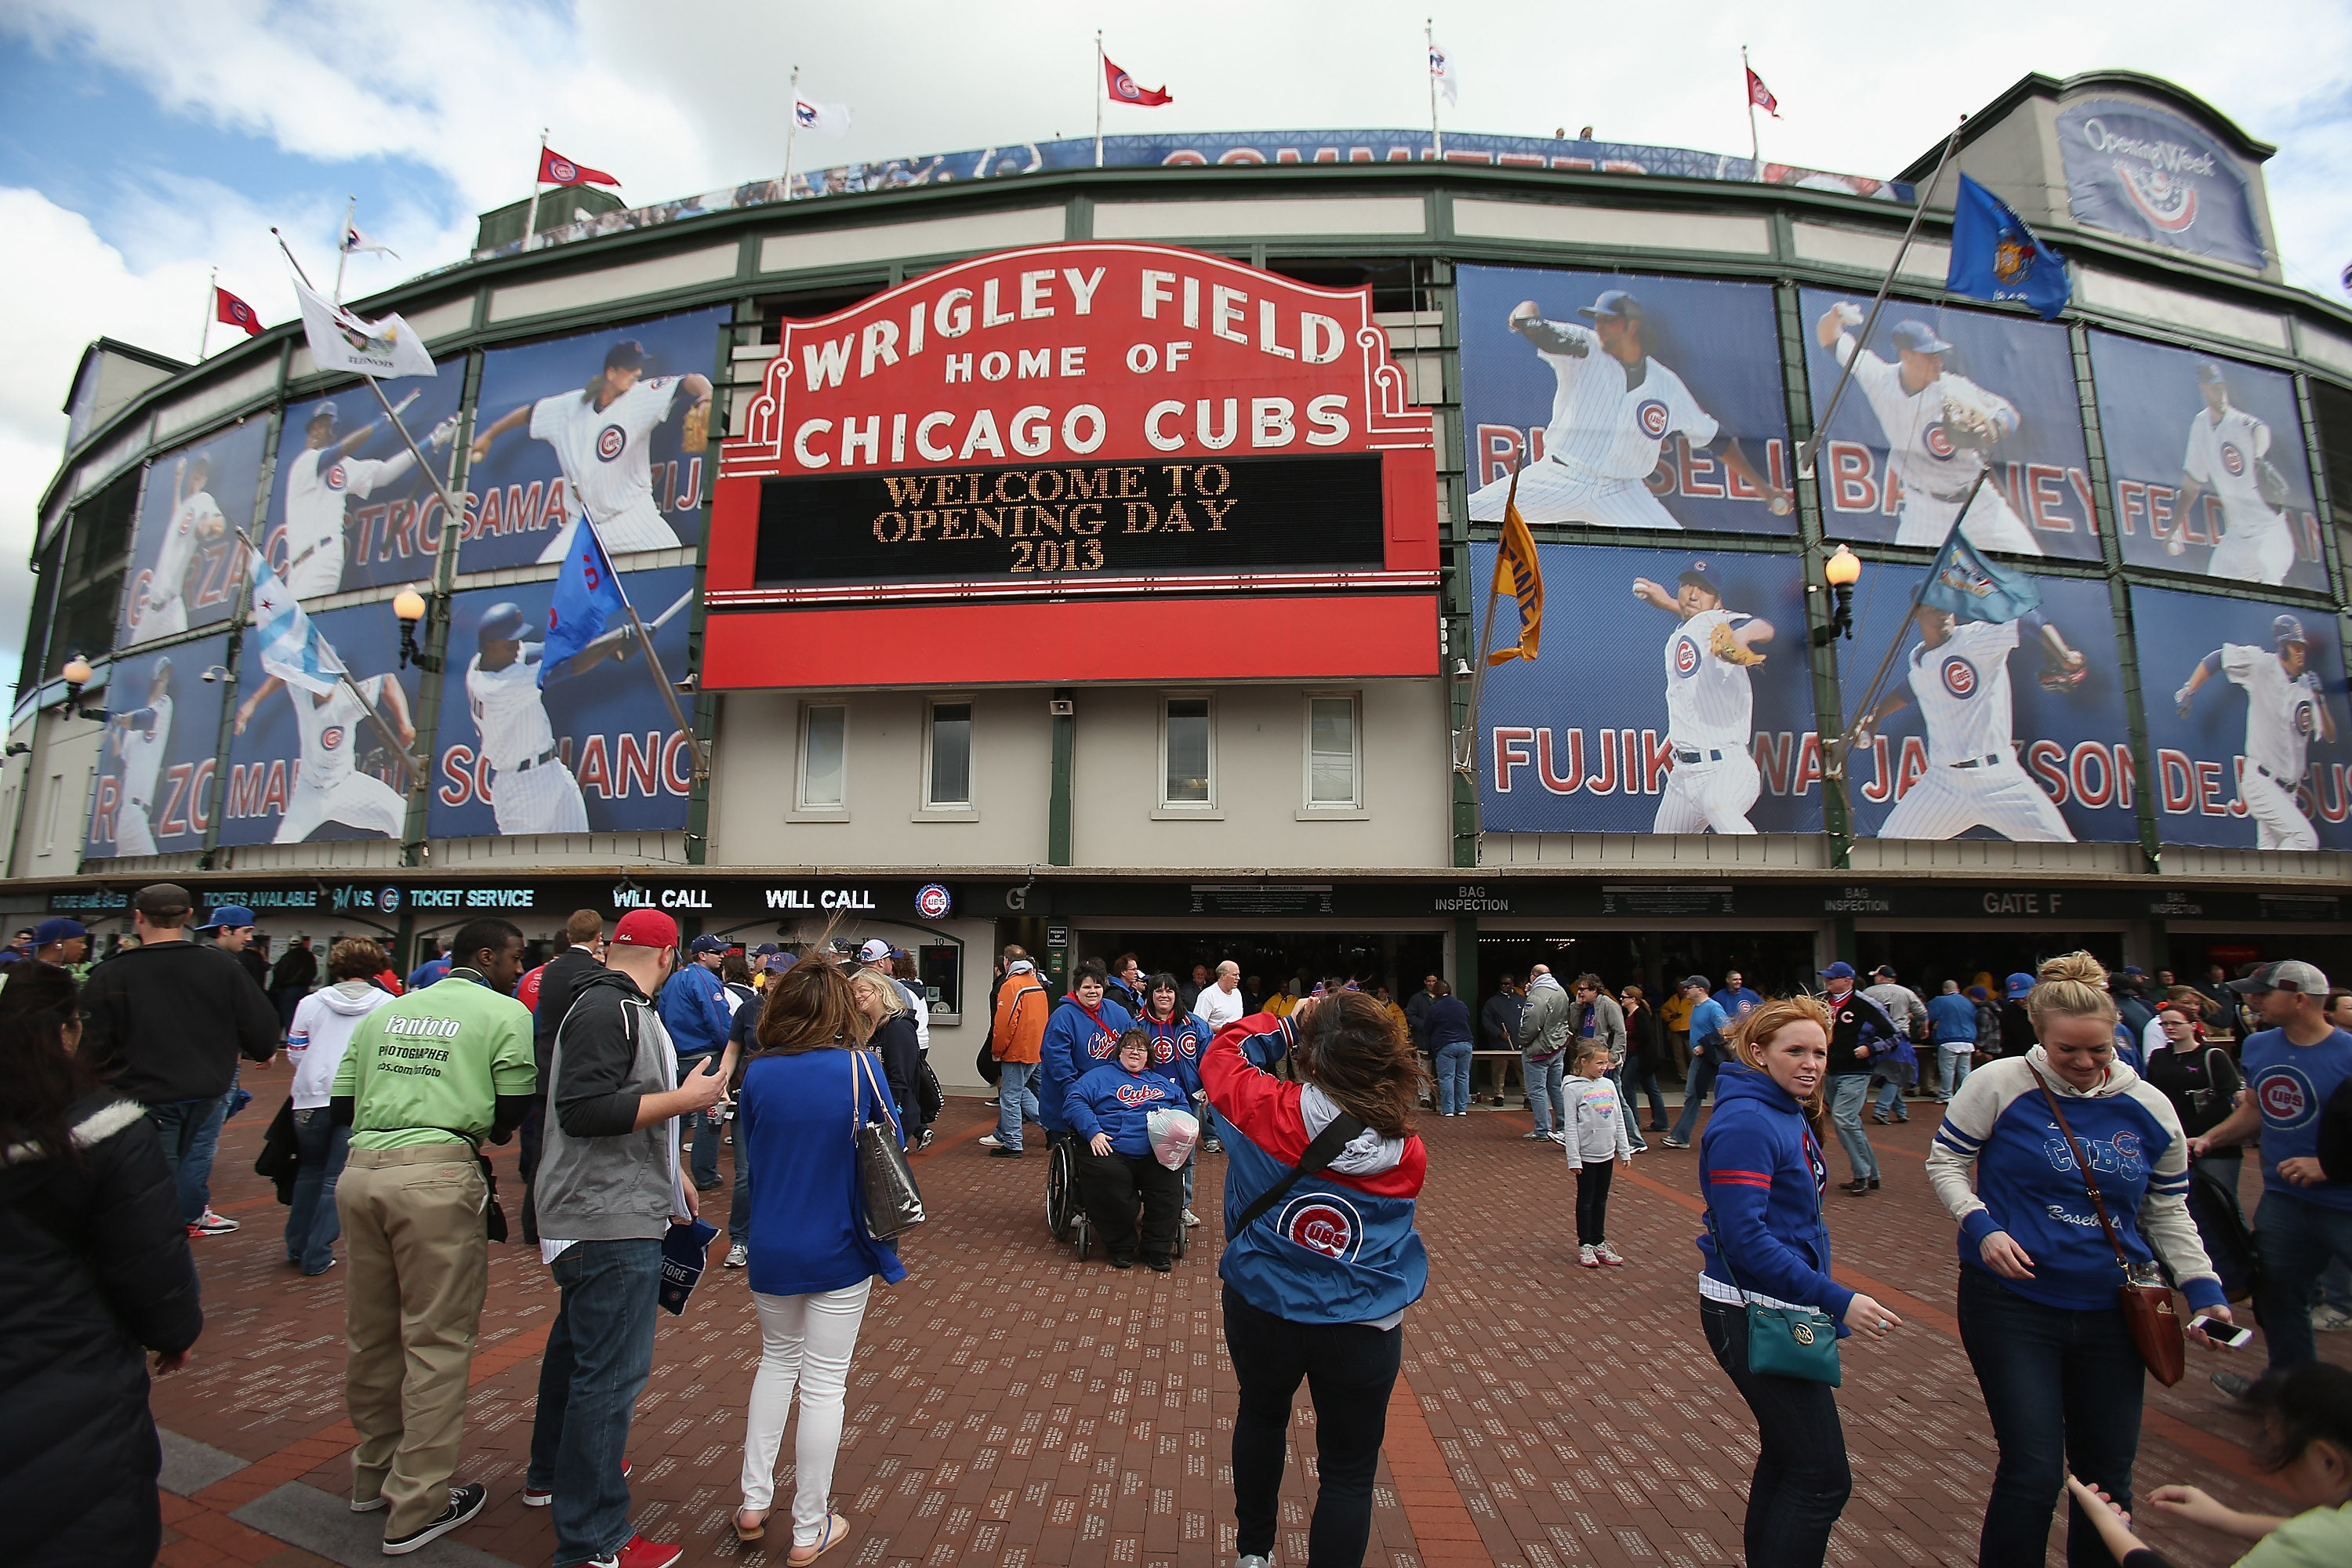 Chicago Cubs: Meet Their Official Photographer